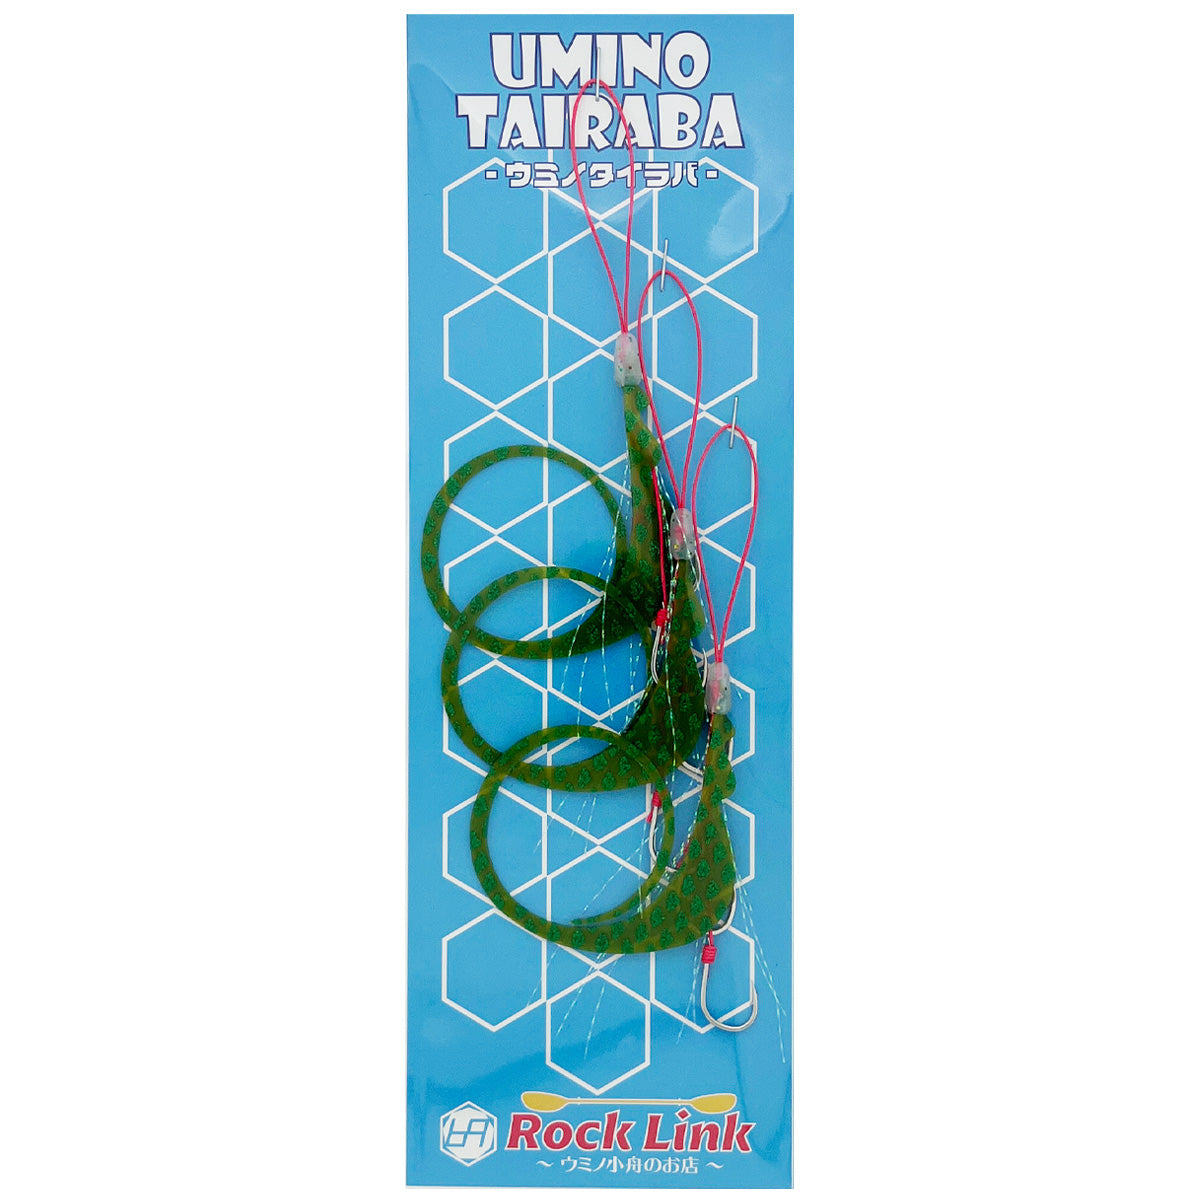 UMINO (ウミノ) タイラバ アツモリシングルカーリー 3セット入 ネクタイ